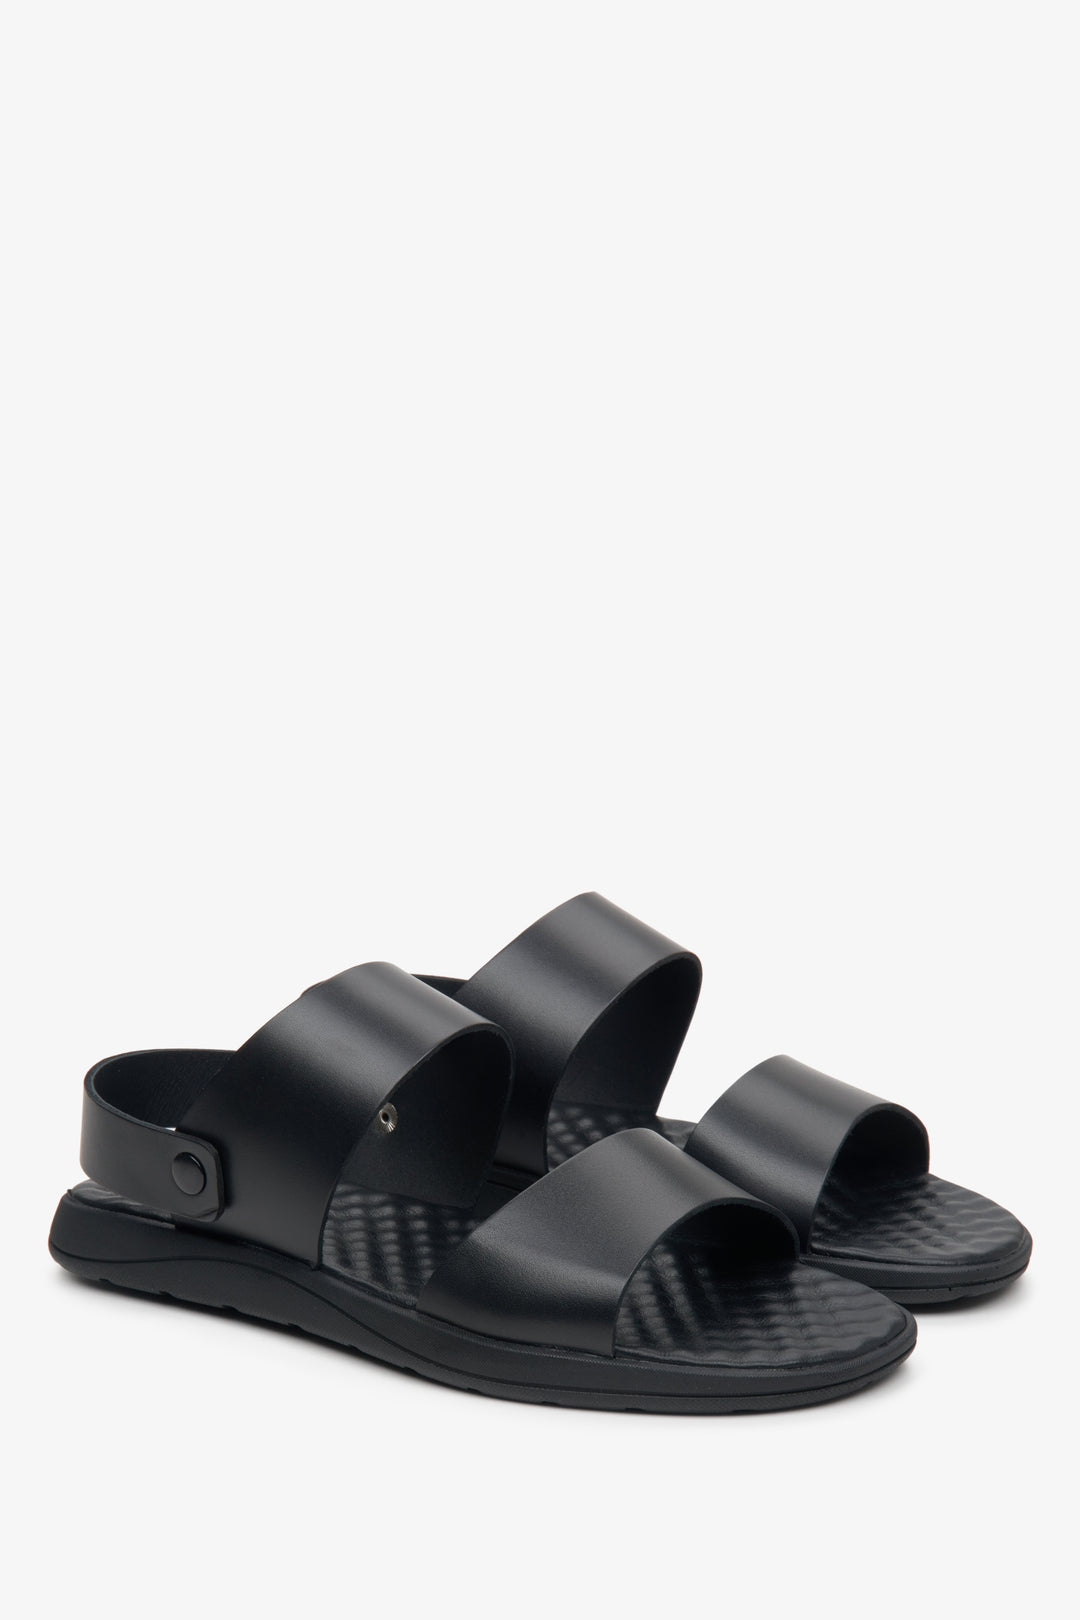 Men's black sandals by Estro with thick straps - footwear profile presentation.